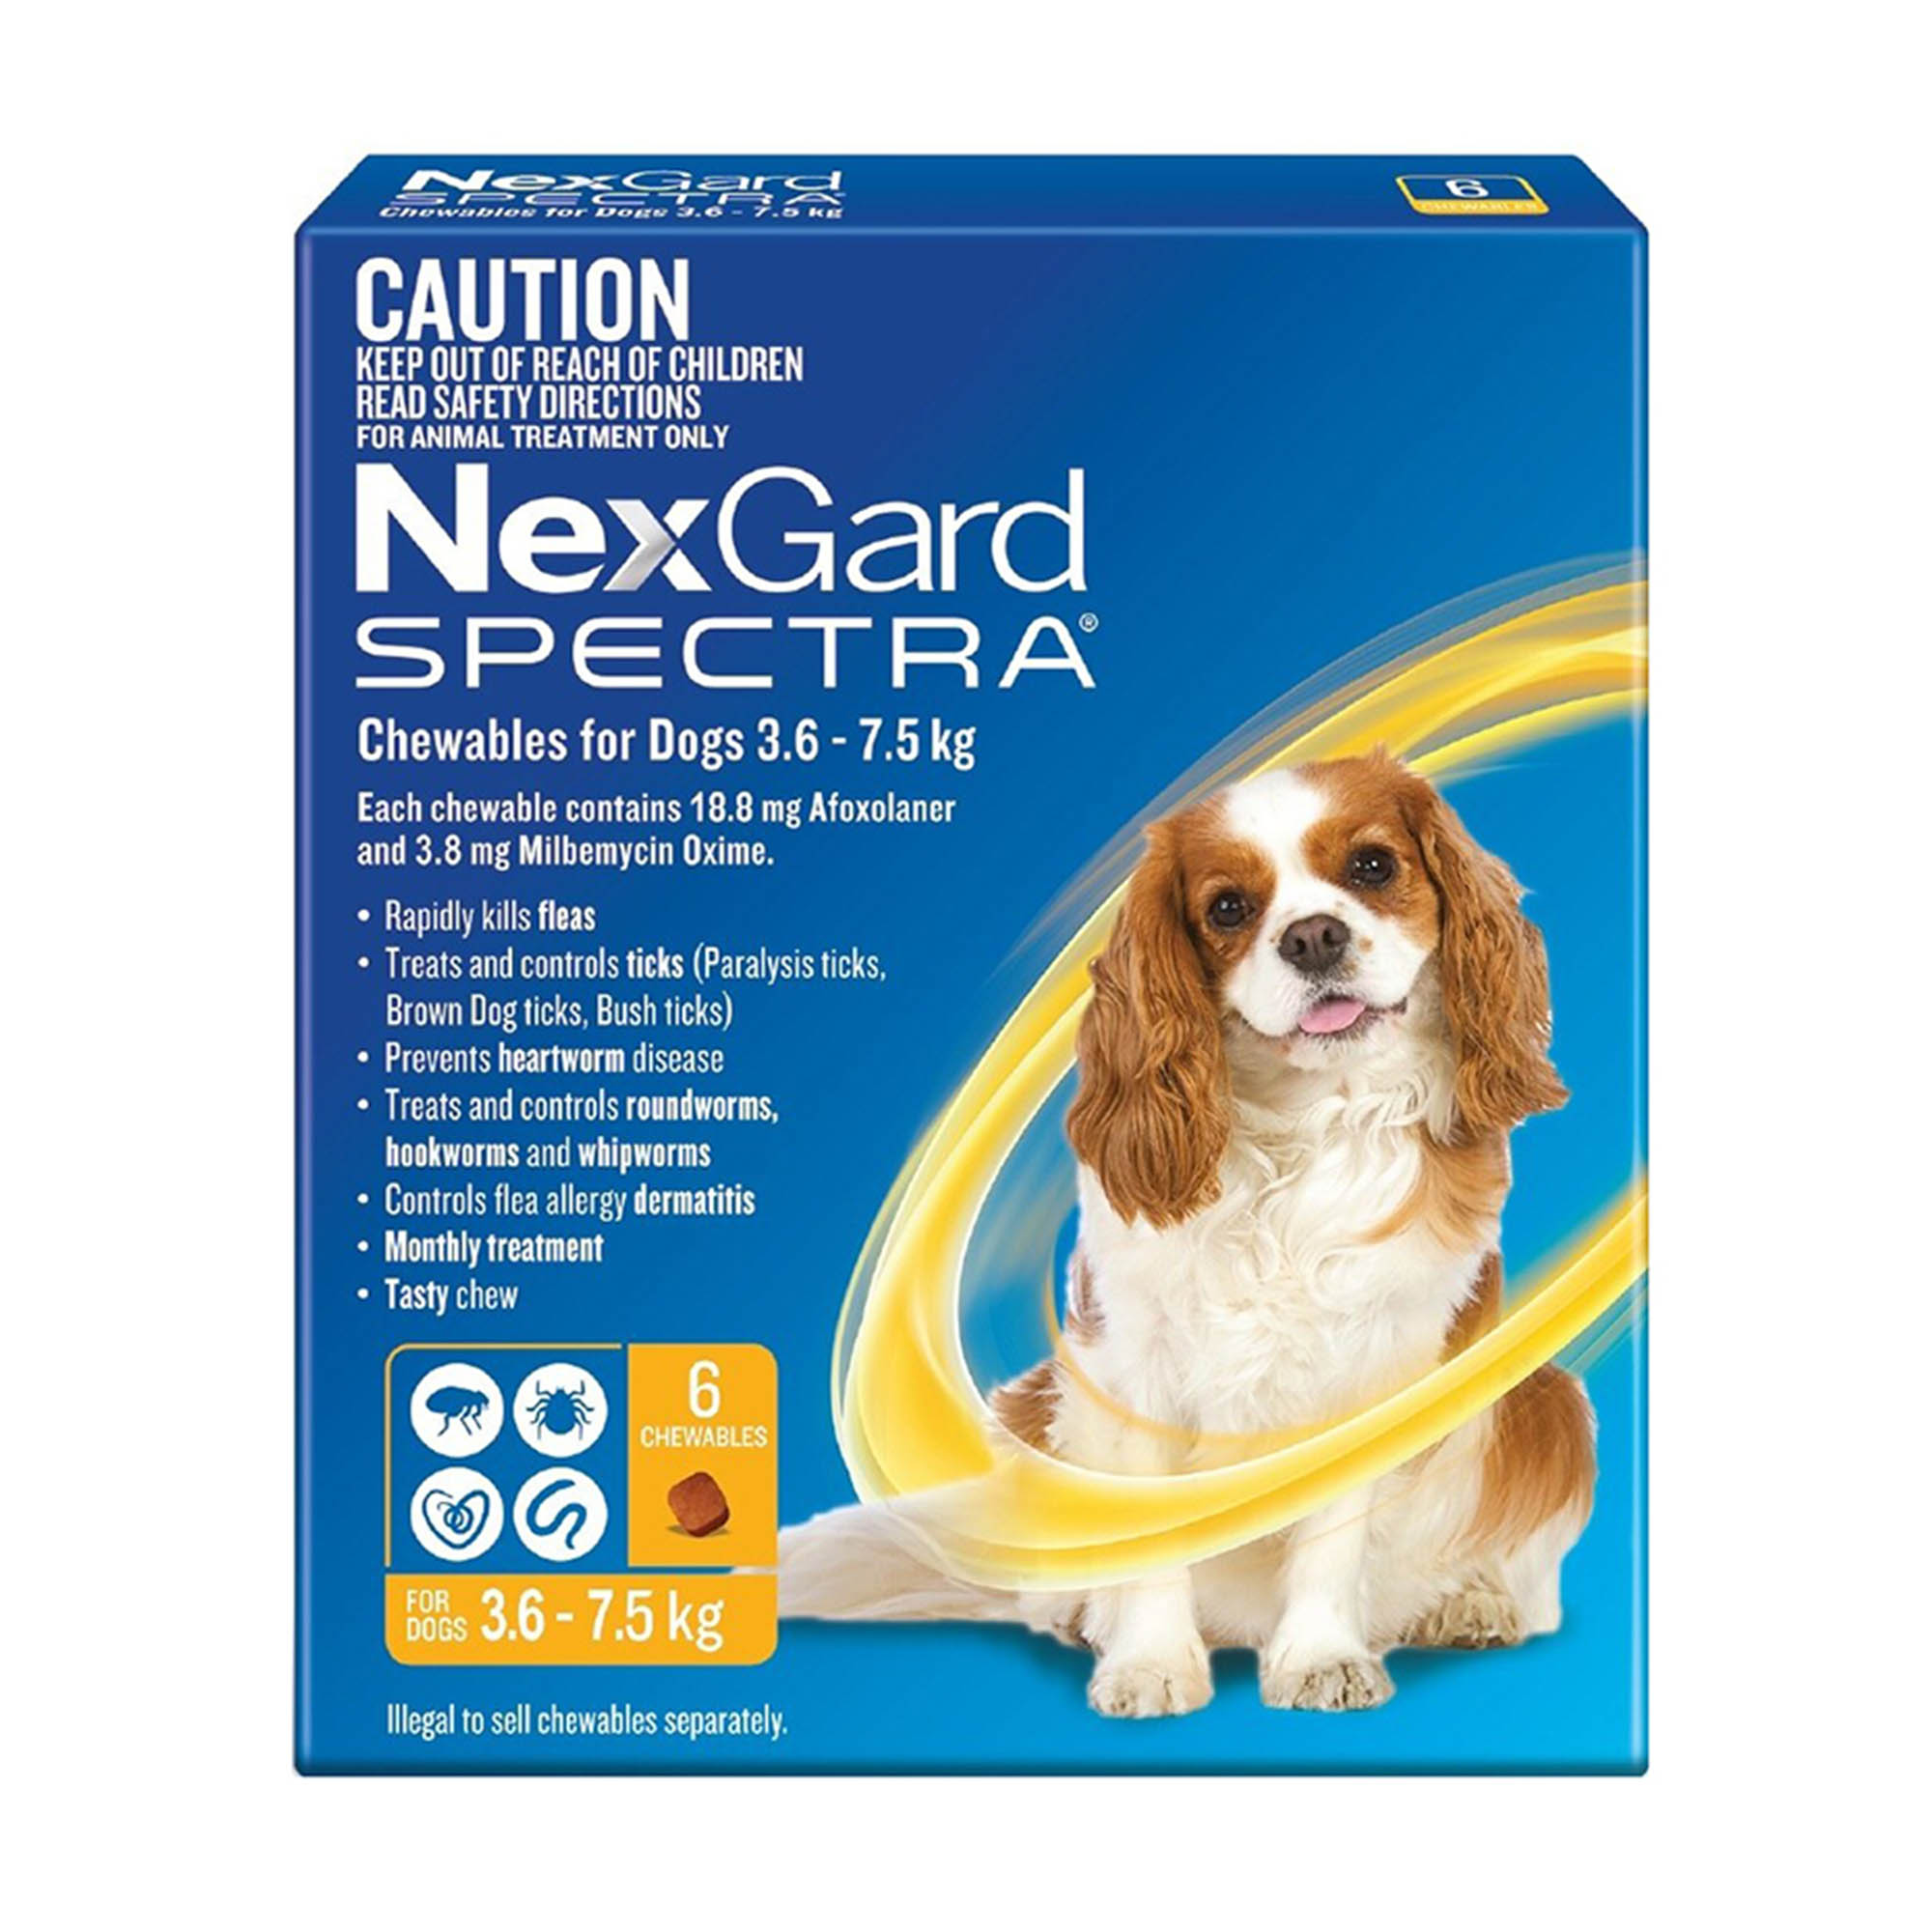 [1 viên] Nexgard Spectra cho chó từ 3.6 đến 7.5kg viên nhai trị ve, ghẻ, sổ giun